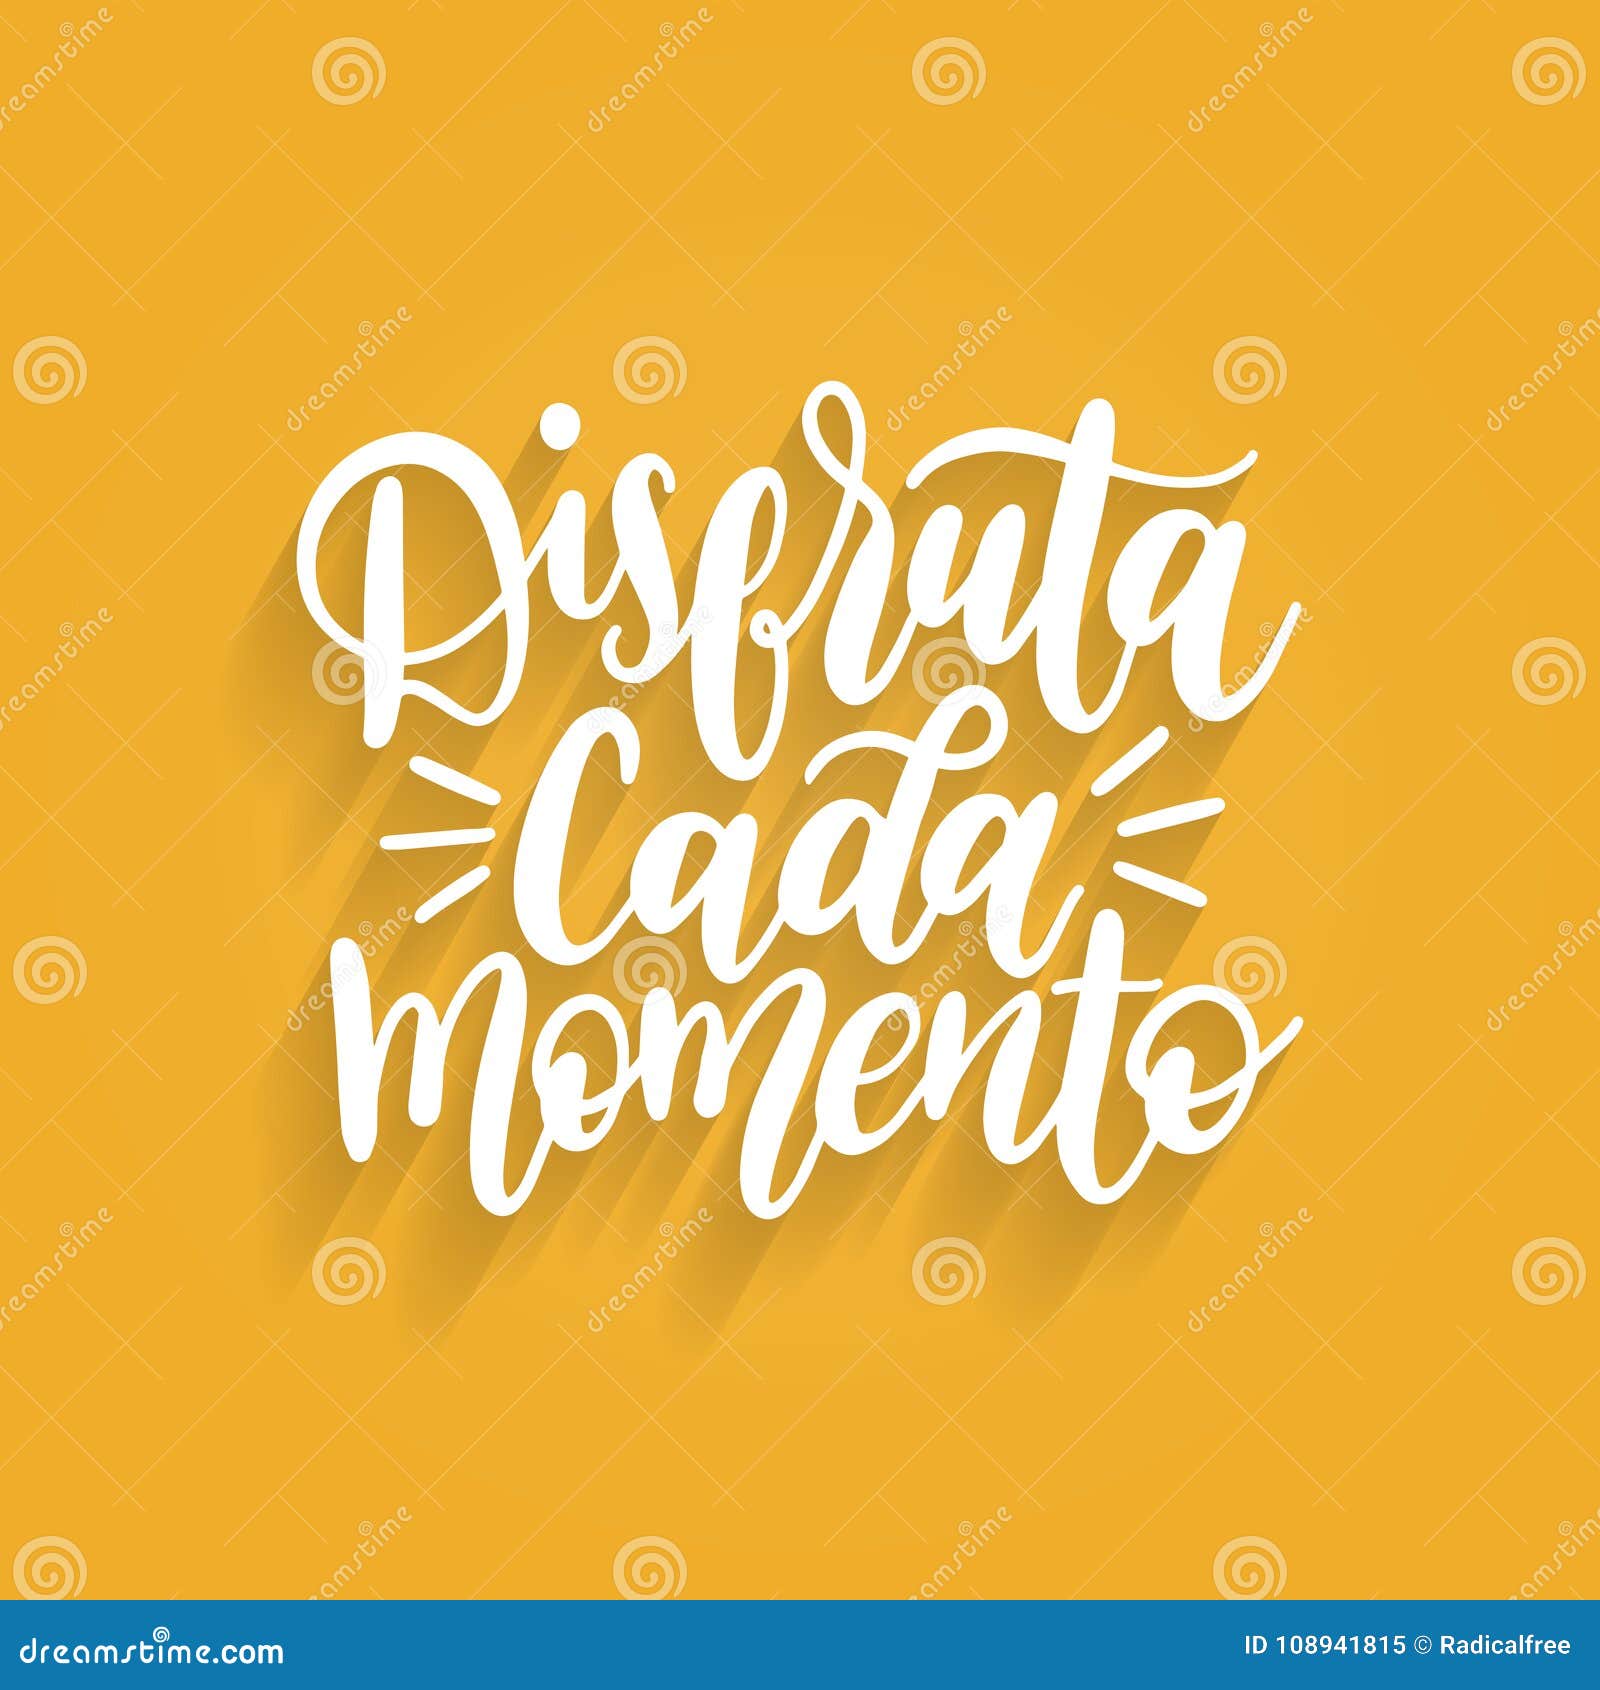 disfruta cada momento translated from spanish enjoy every moment  handwritten phrase on yellow background.